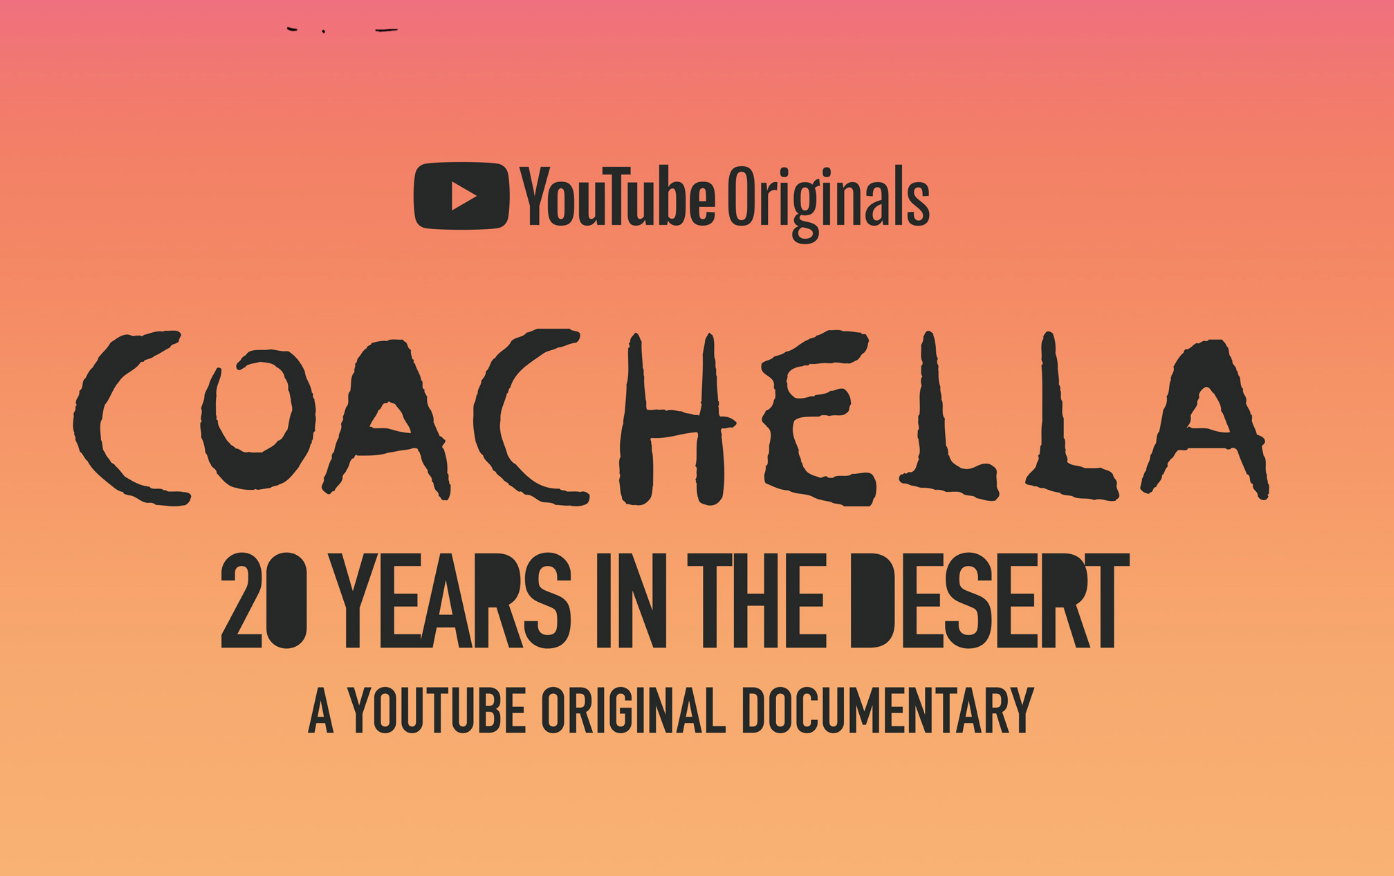 Youtube Doc's 'Coachella: 20 Years in the Desert' (FULL DOCUMENTARY)